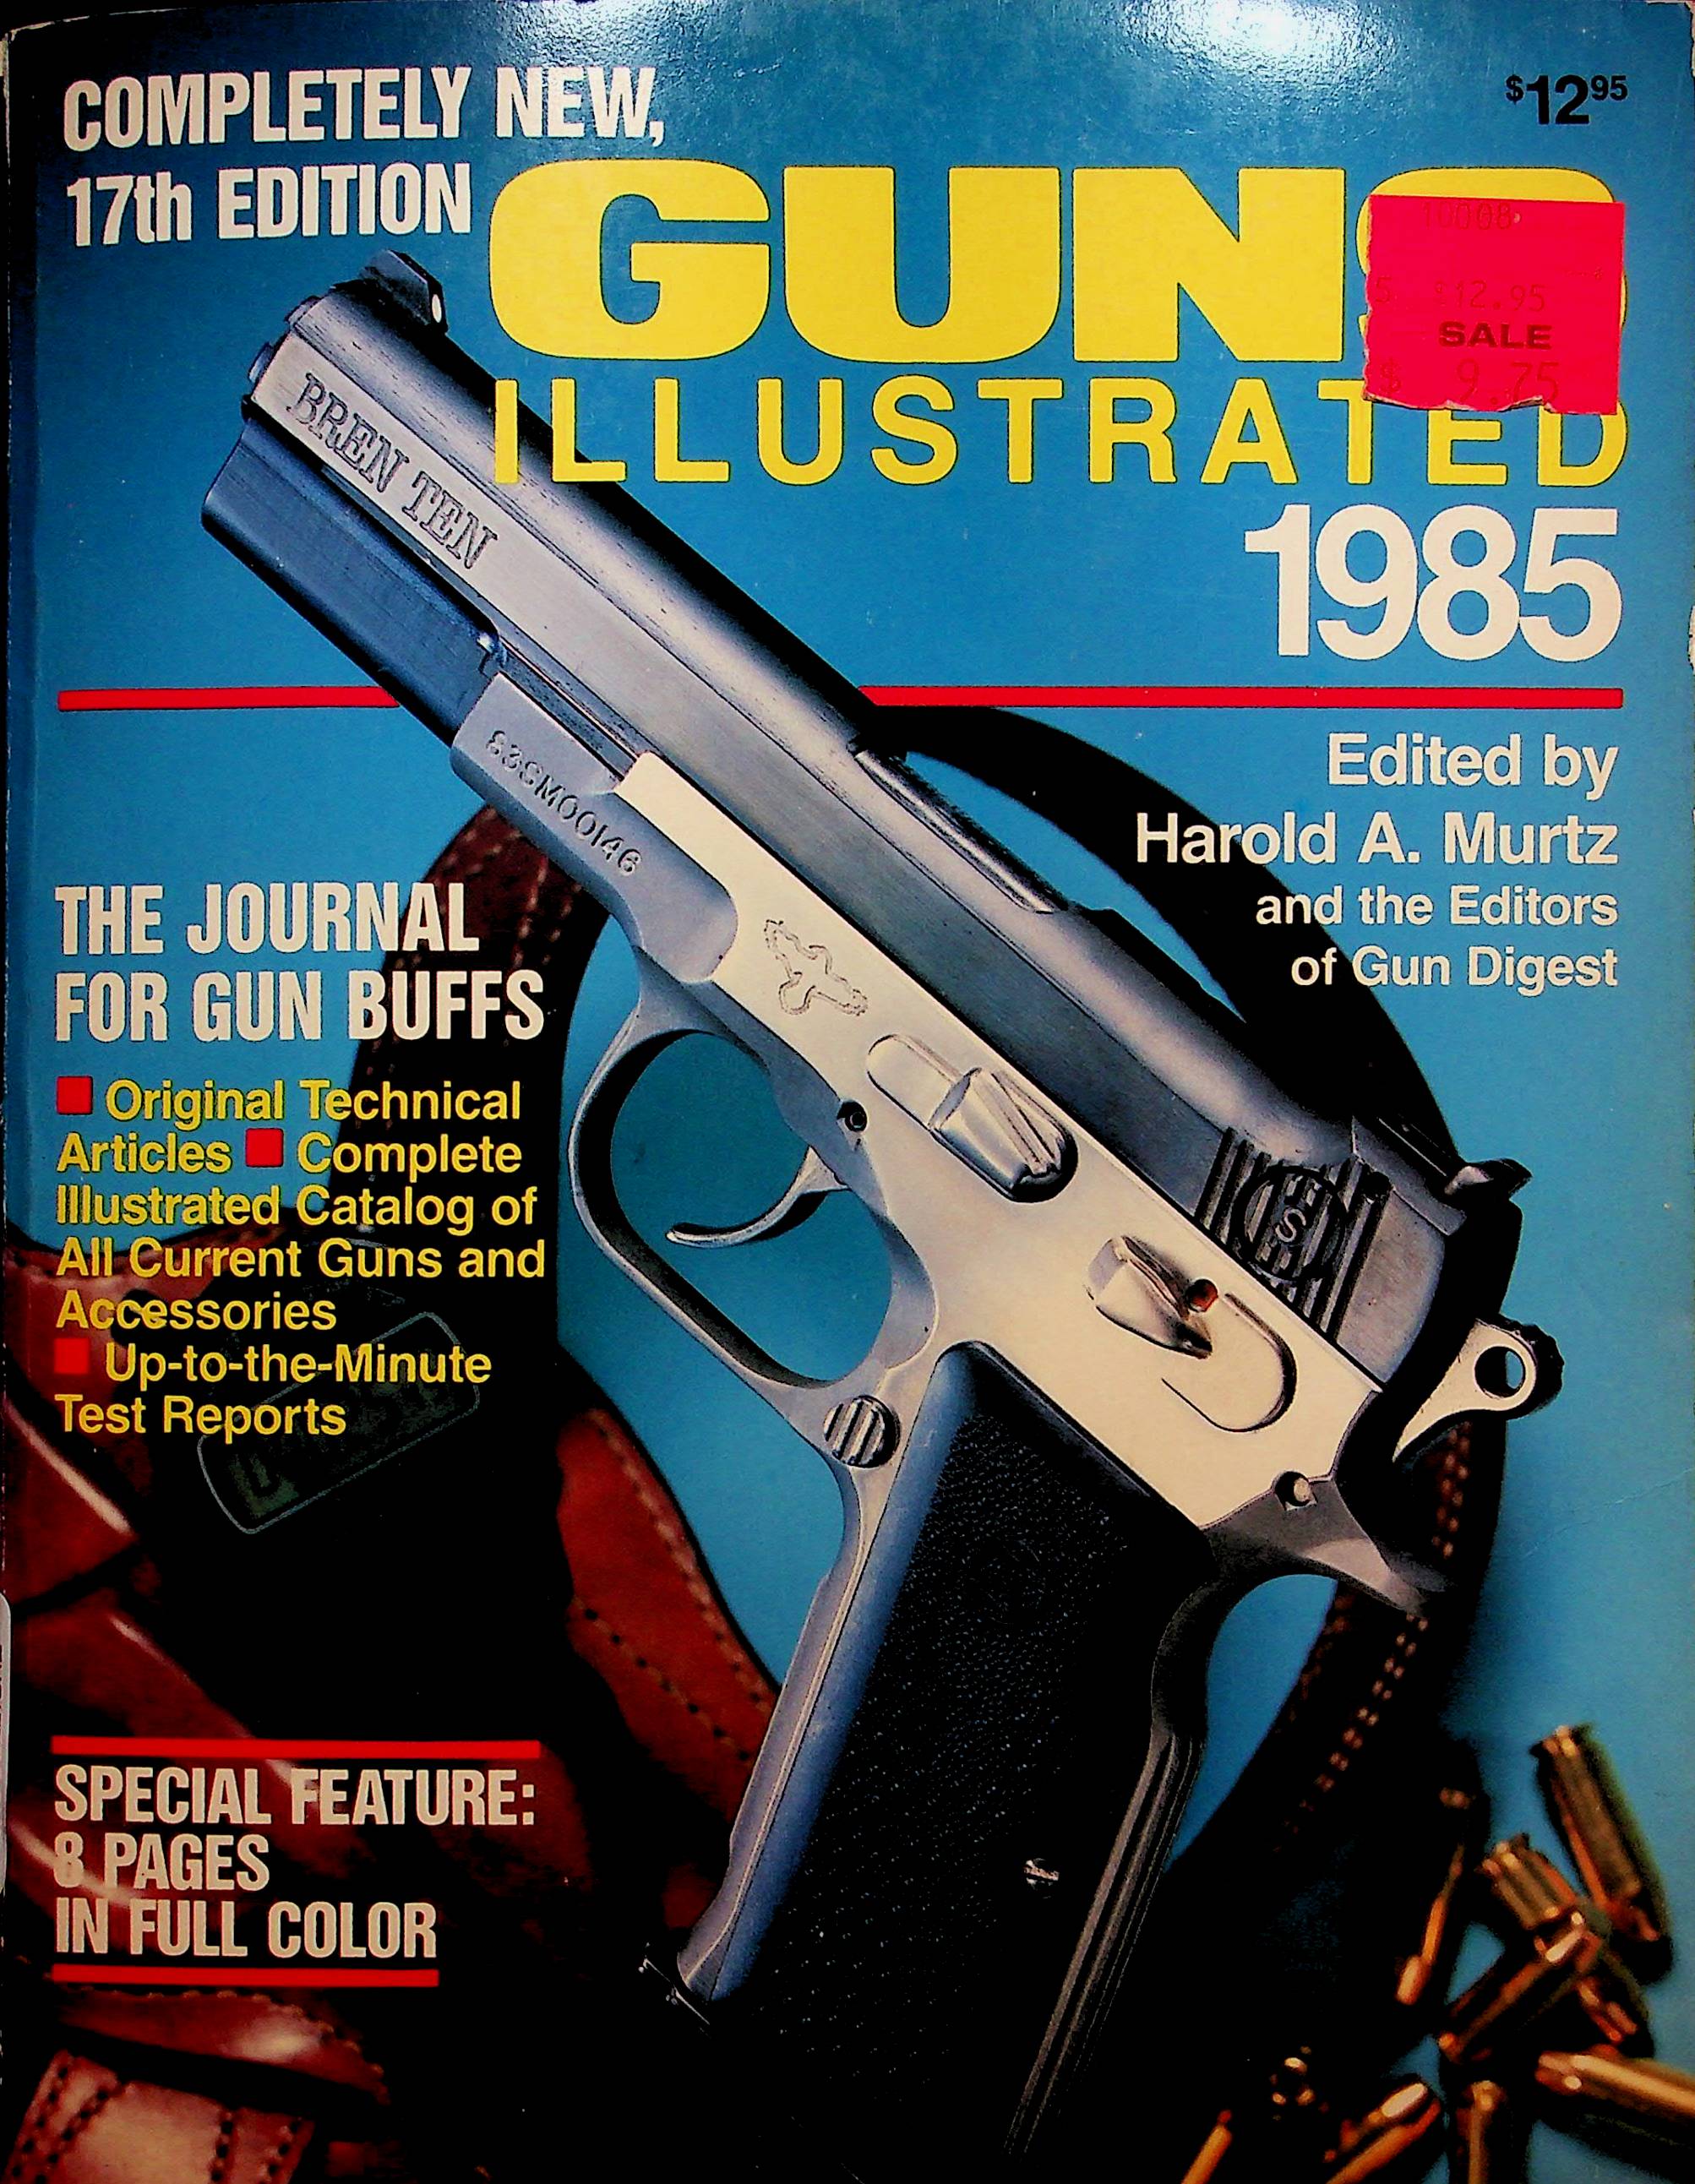 guns-illustrated-1985-front_cover.jpg